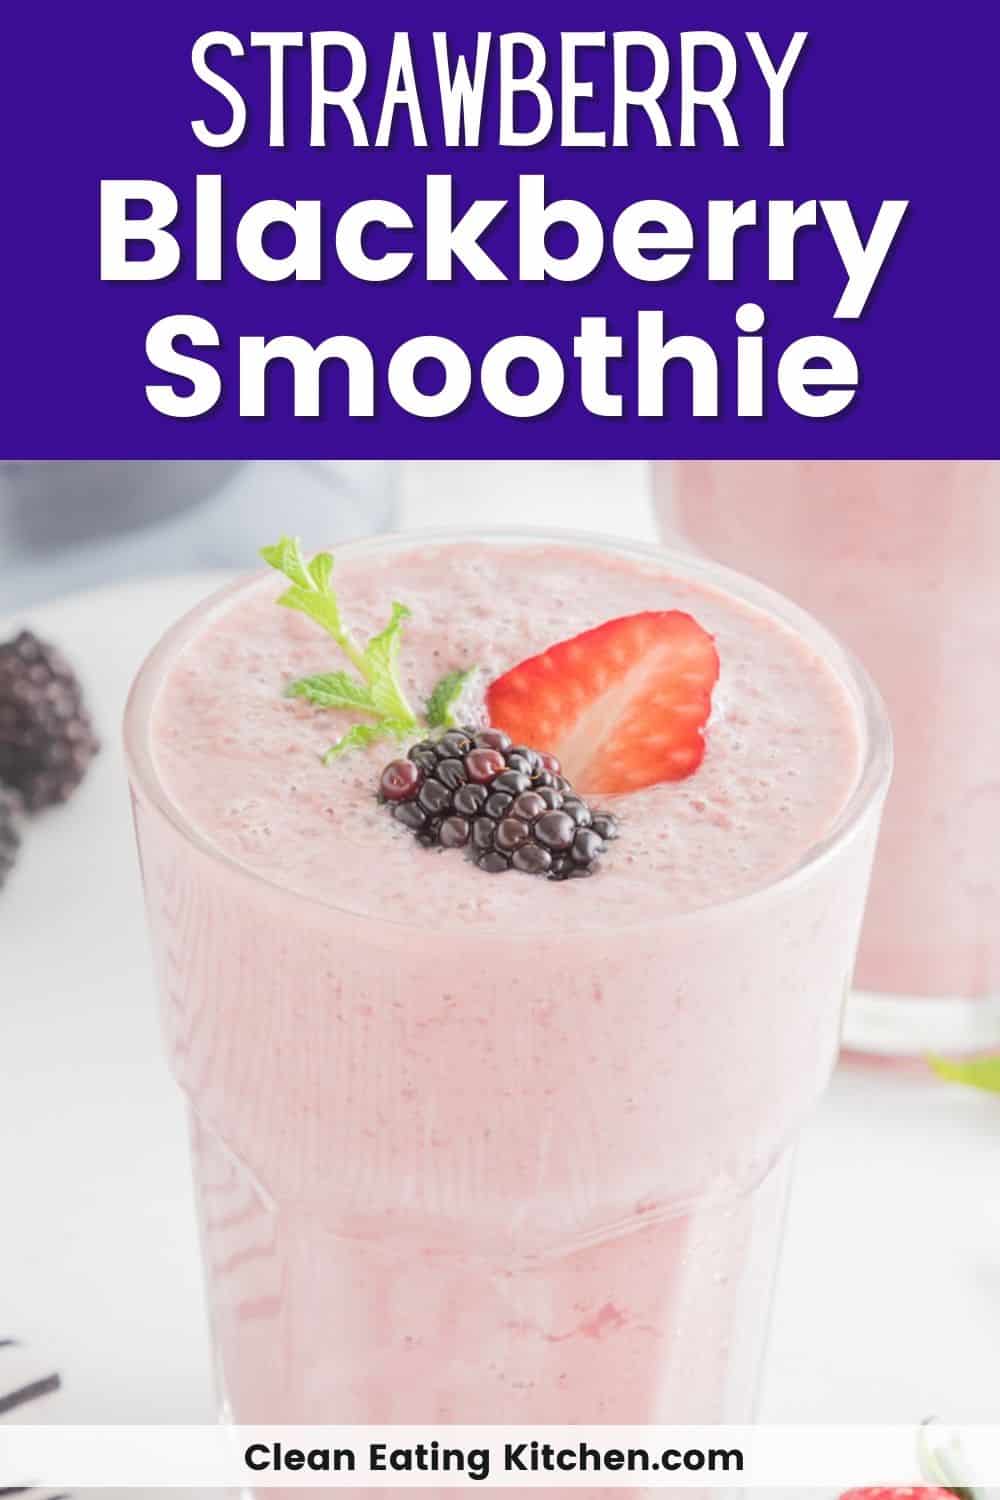 Strawberry Blackberry Banana Smoothie - Clean Eating Kitchen